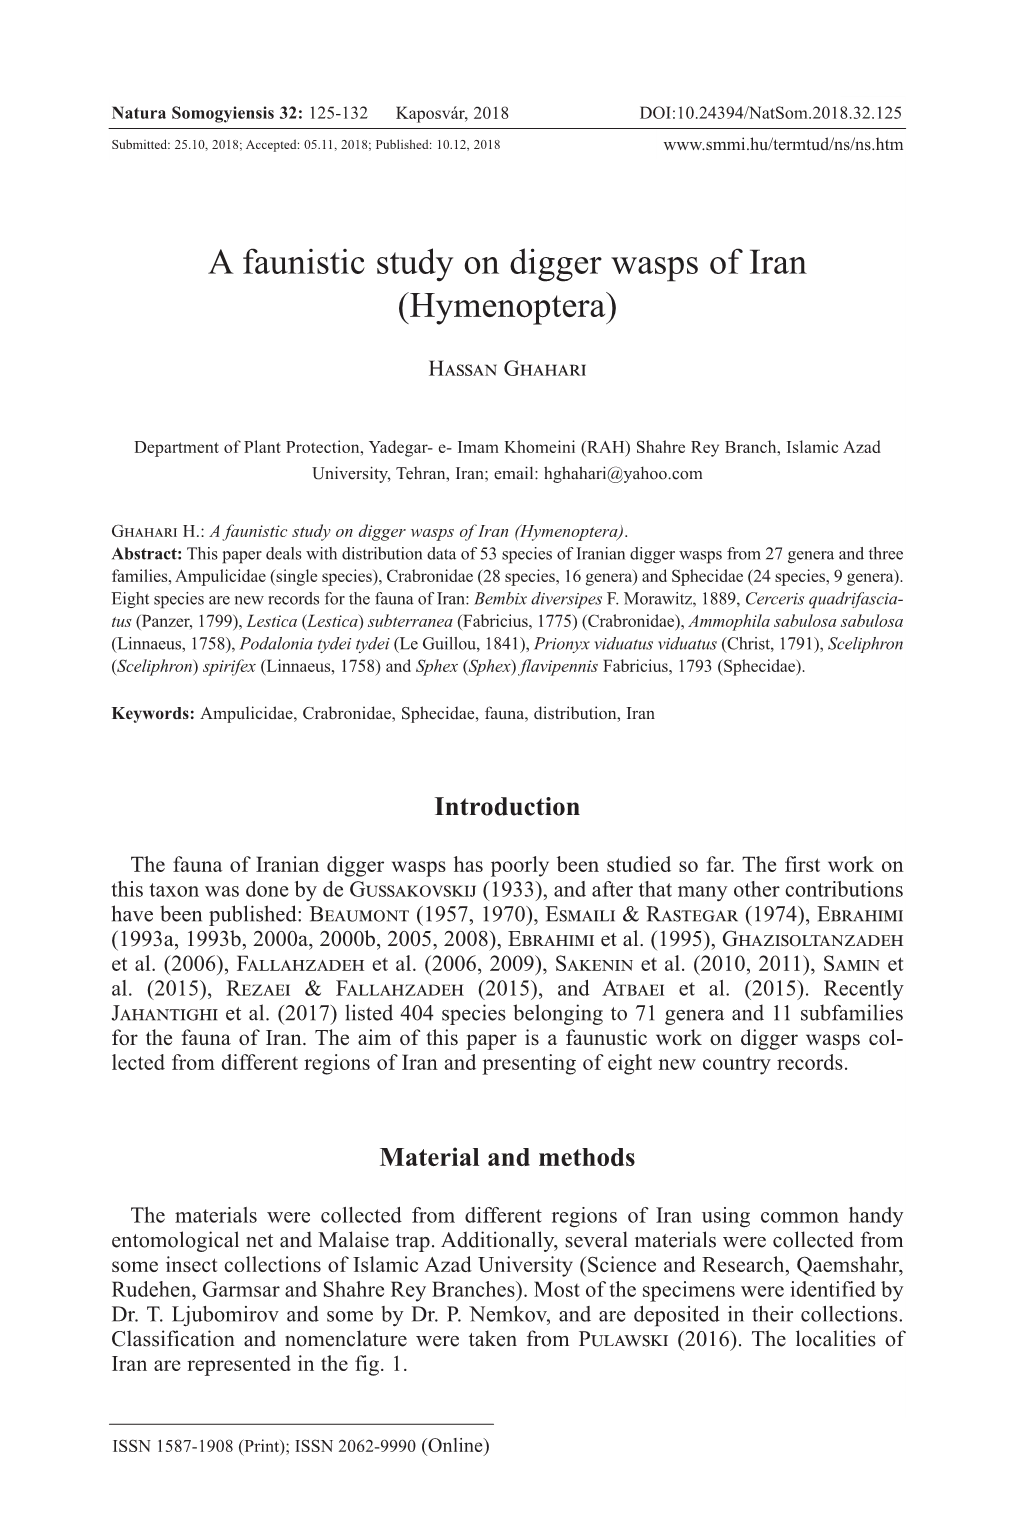 A Faunistic Study on Digger Wasps of Iran (Hymenoptera)